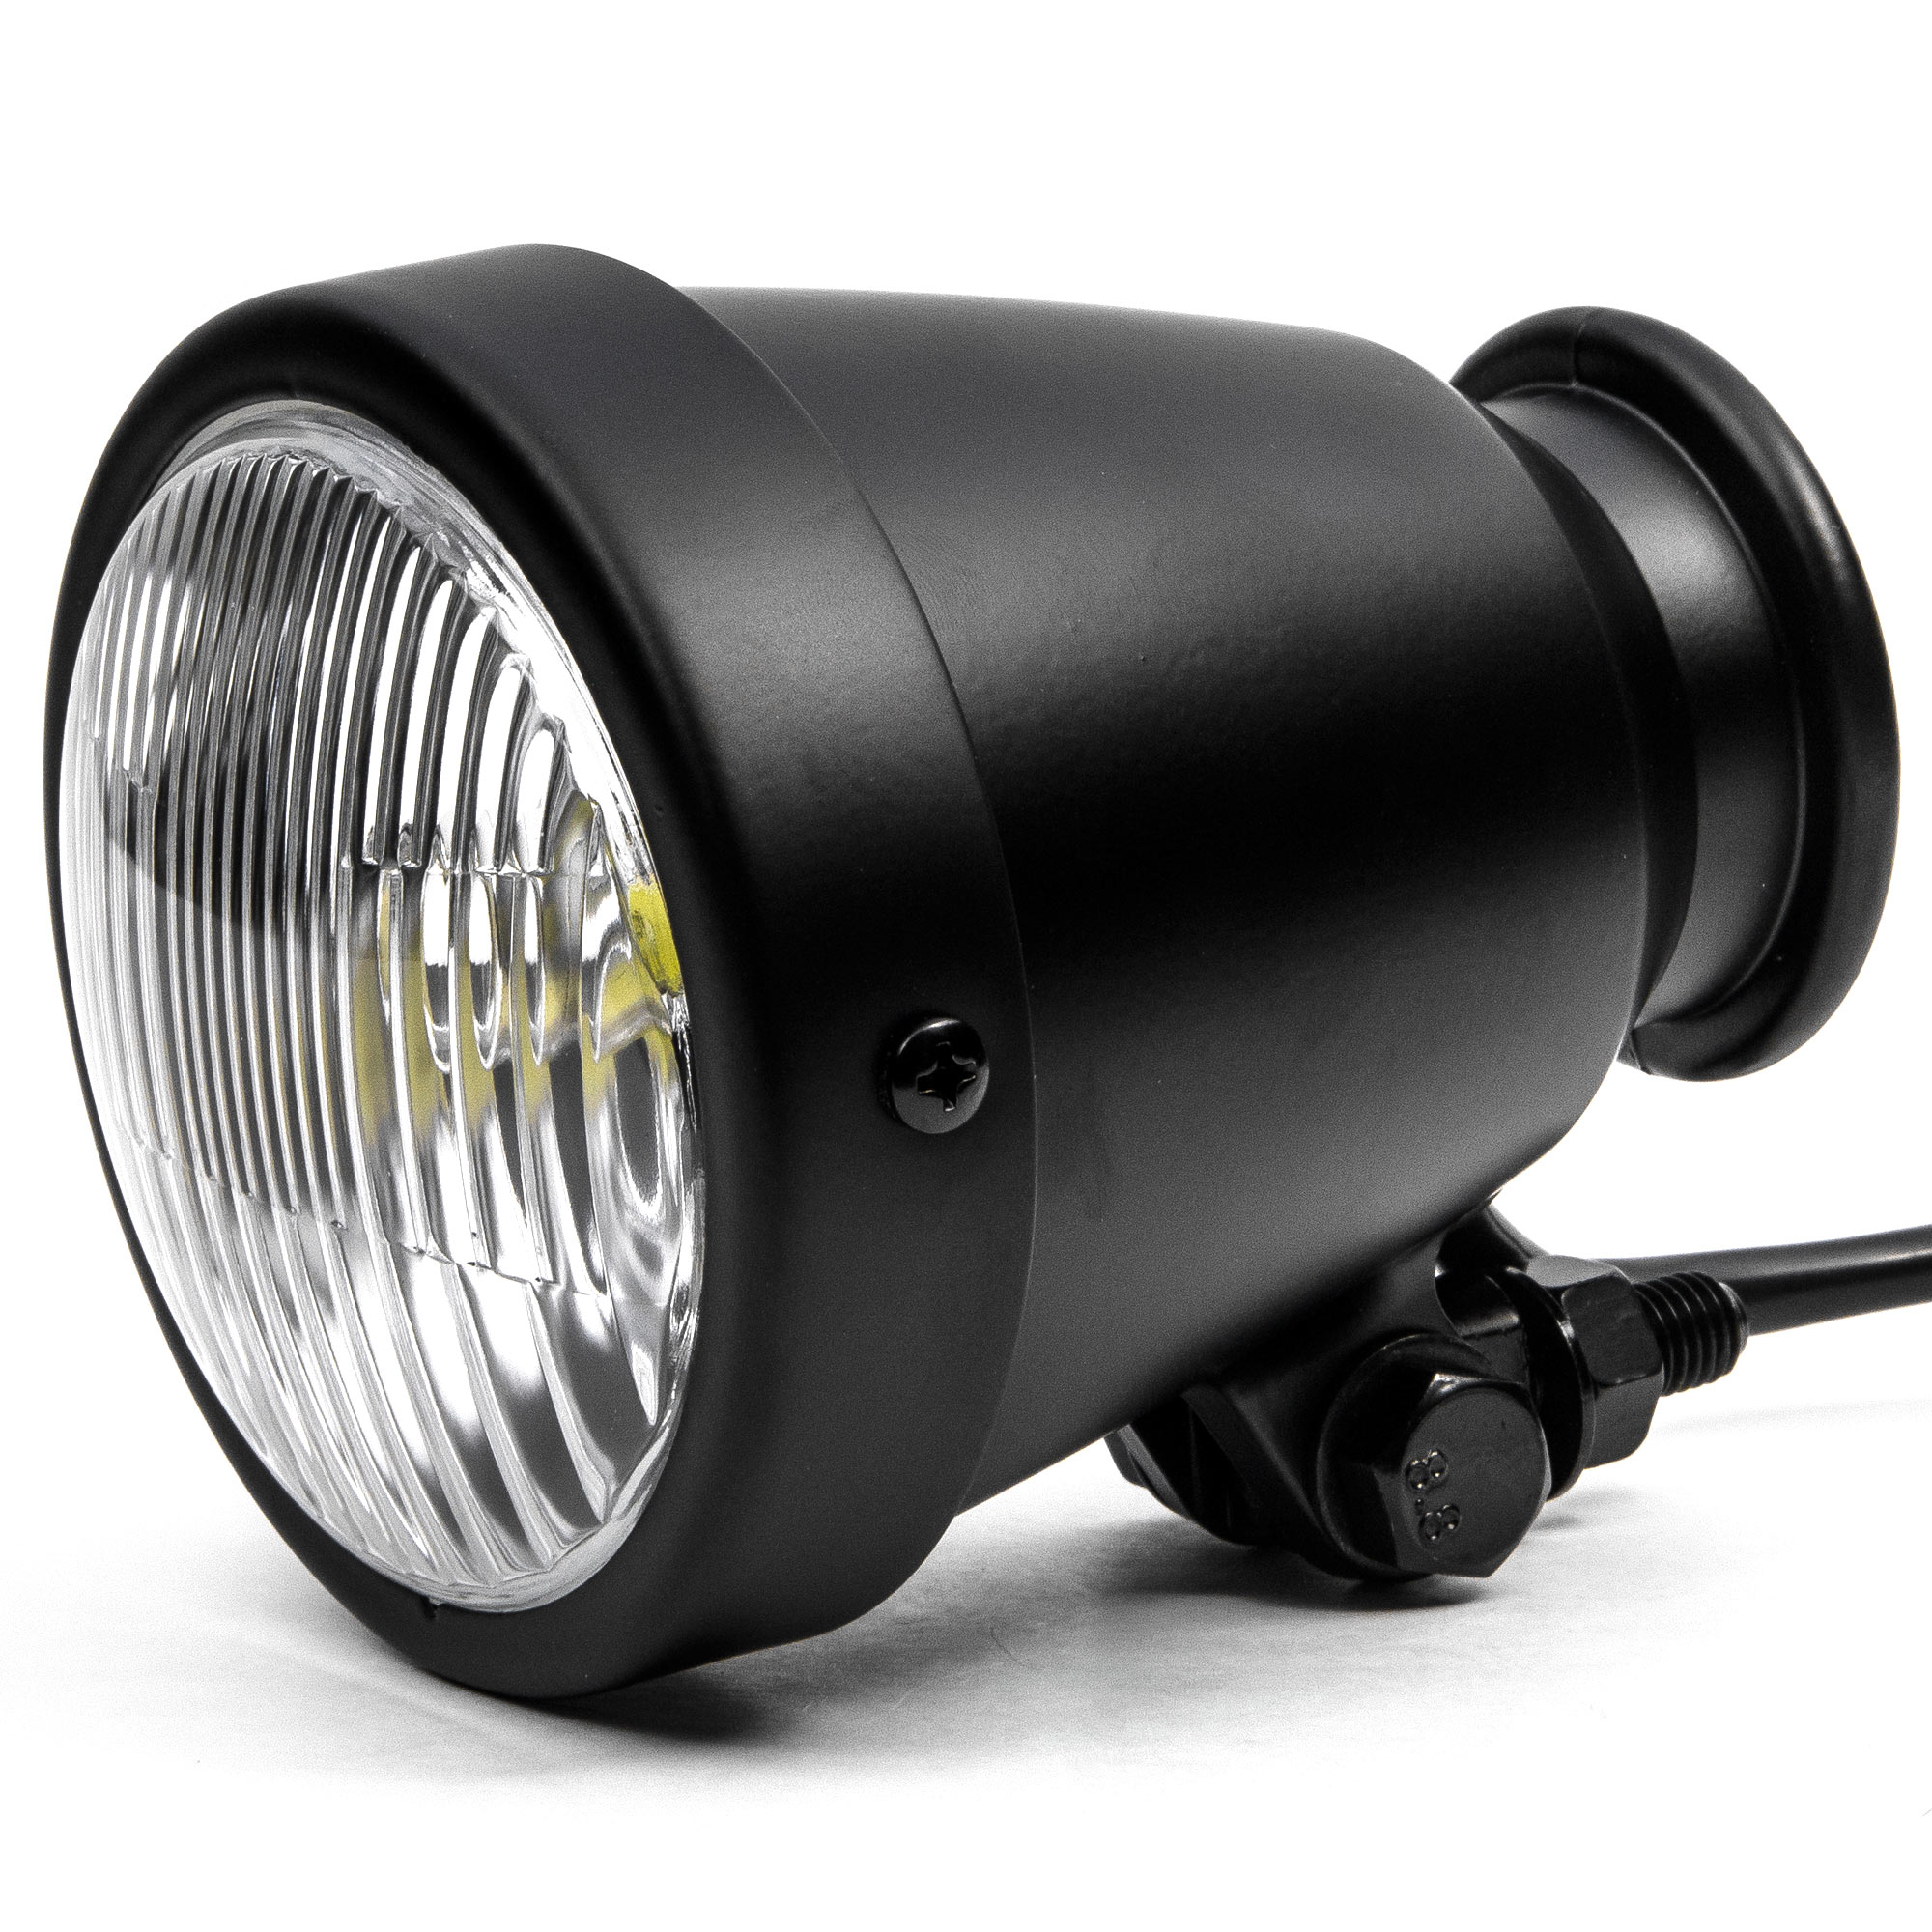 Krator 4.25" Mini Headlight w/ High and Low Beam + Fog Lights LED Bulb Black Housing Compatible with Yamaha V-Star Vstar 950 1100 1300